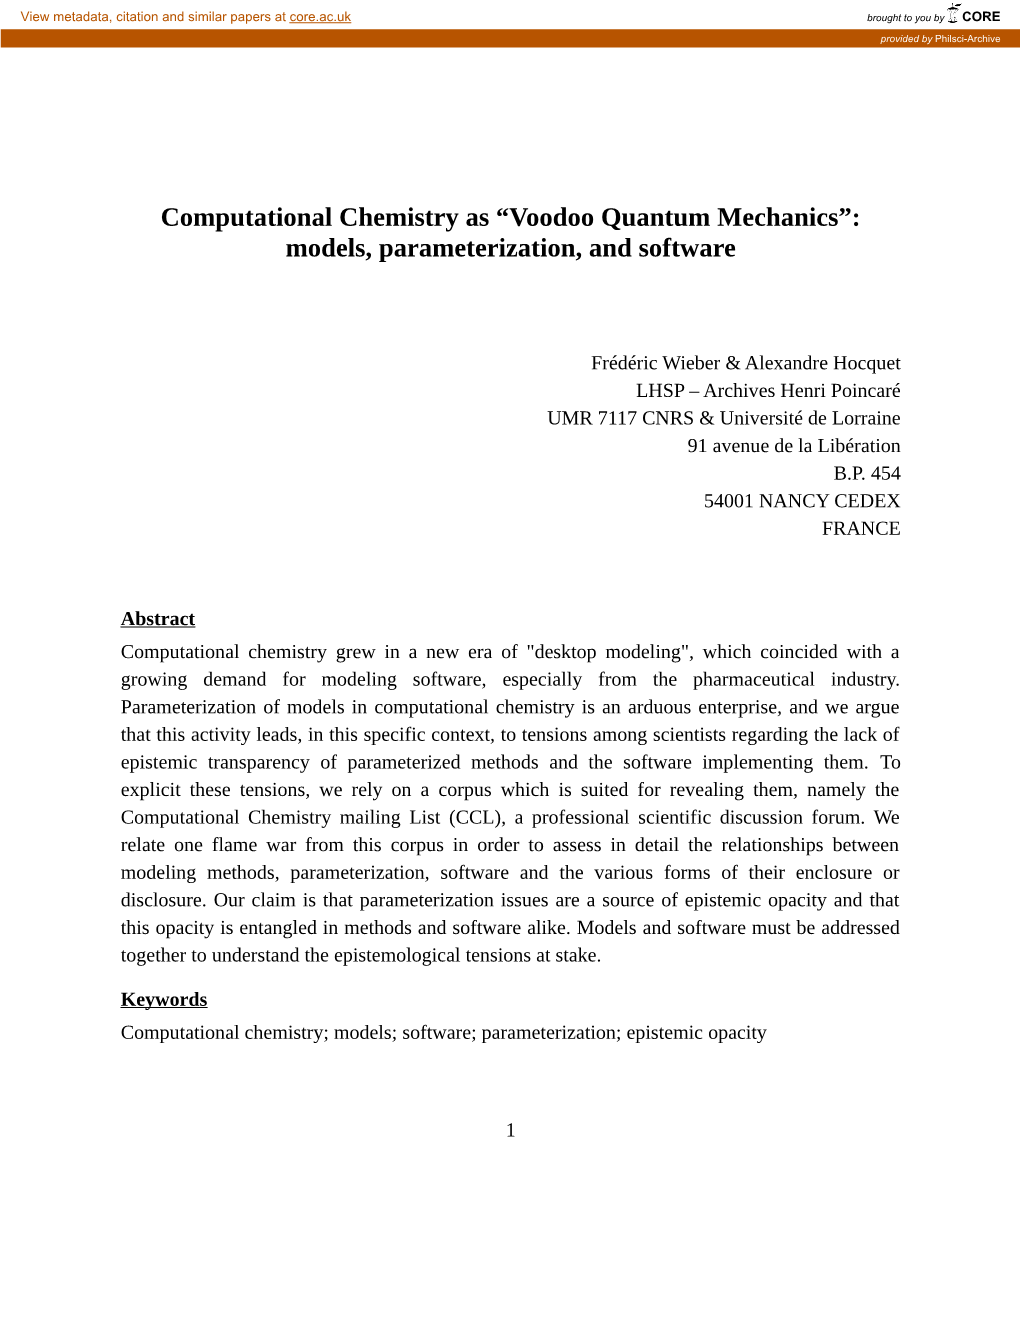 Computational Chemistry As “Voodoo Quantum Mechanics”: Models, Parameterization, and Software